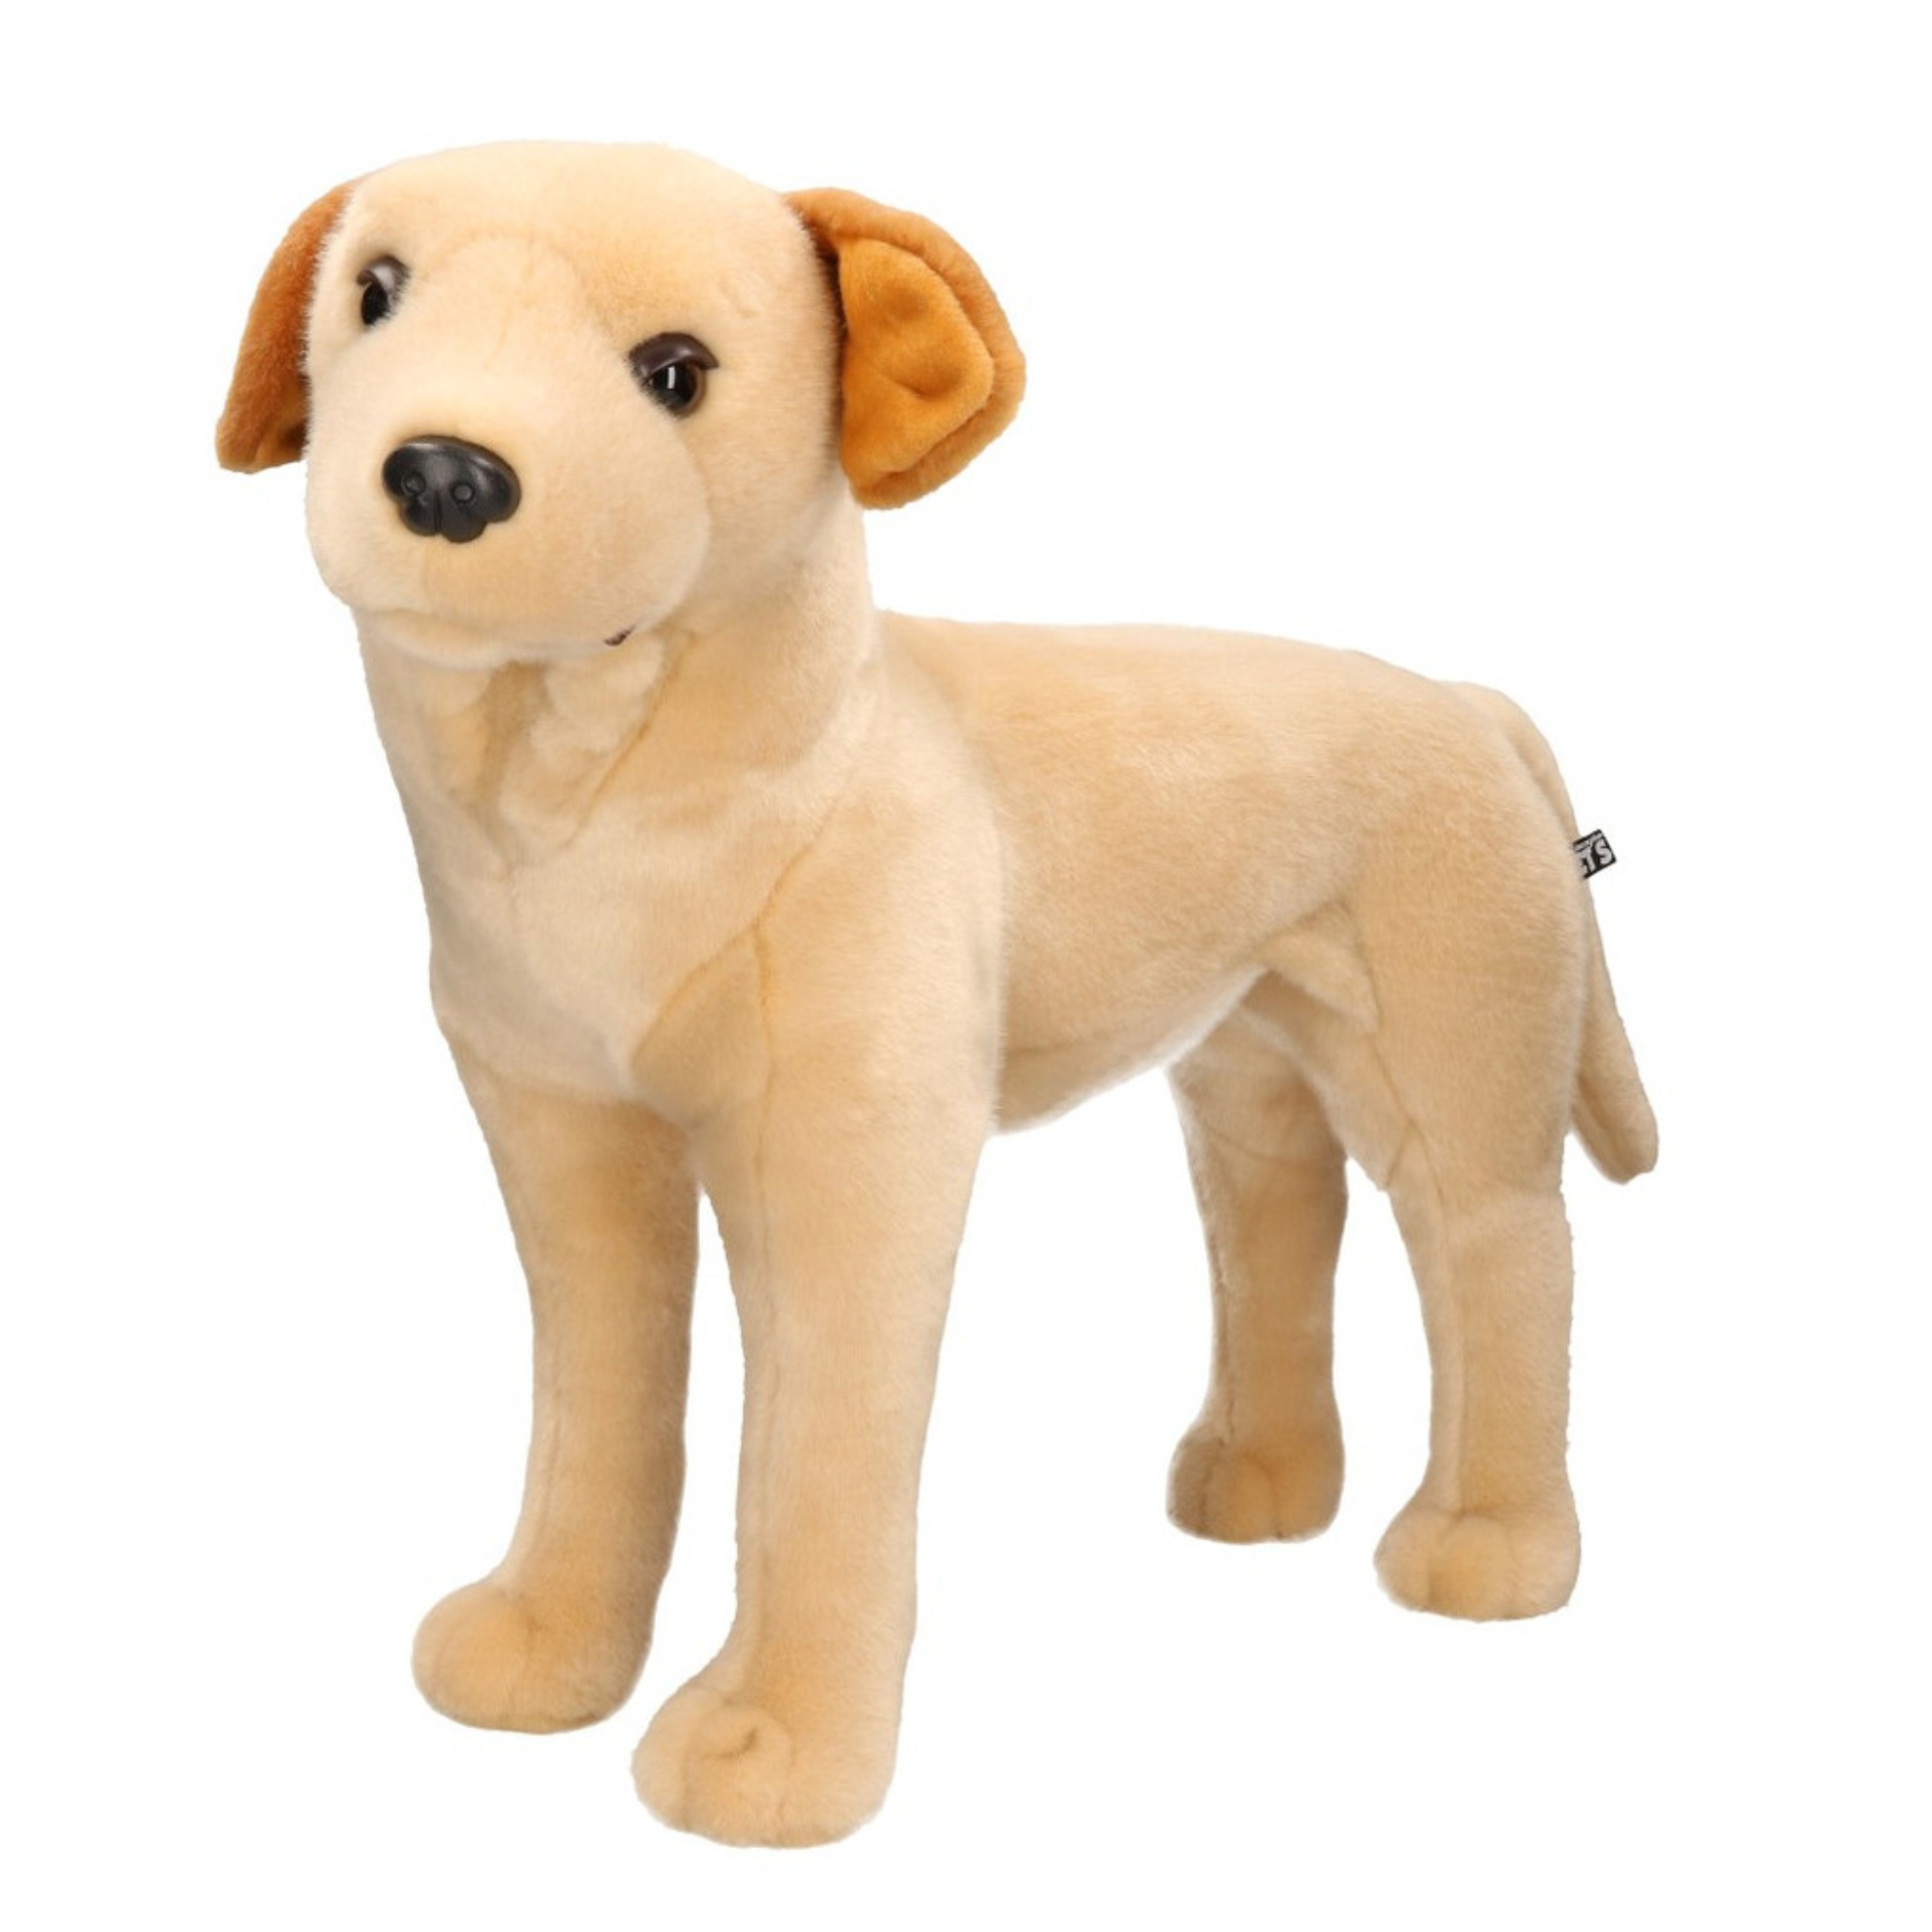 Honden speelgoed artikelen Labrador knuffelbeest blond 53 cm